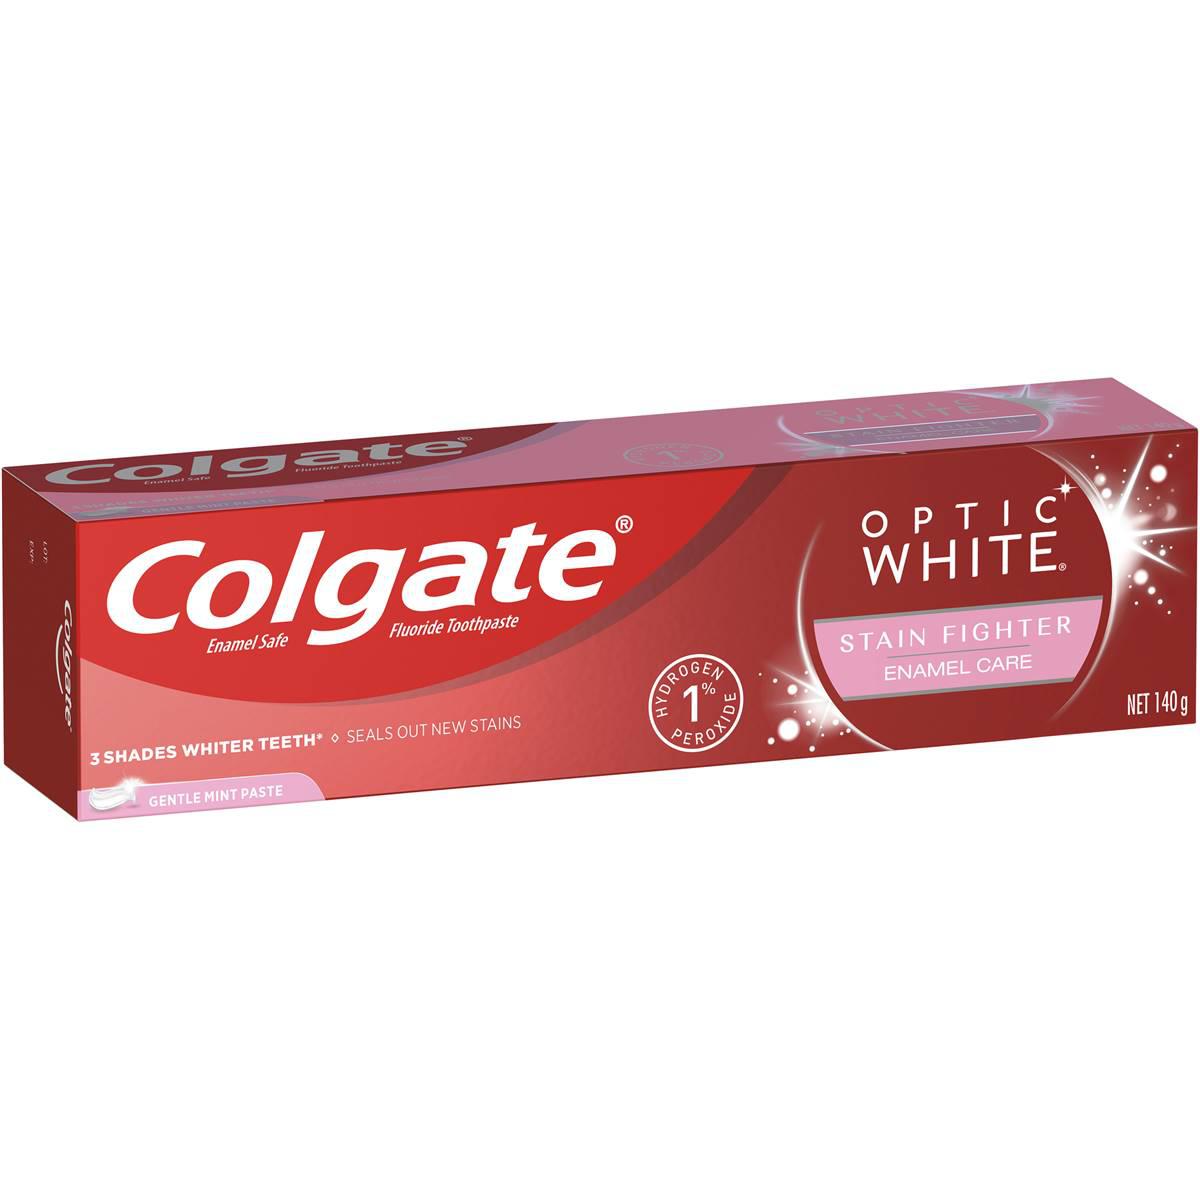 Colgate Optic White Enamel Care Teeth Whitening Toothpaste 140g